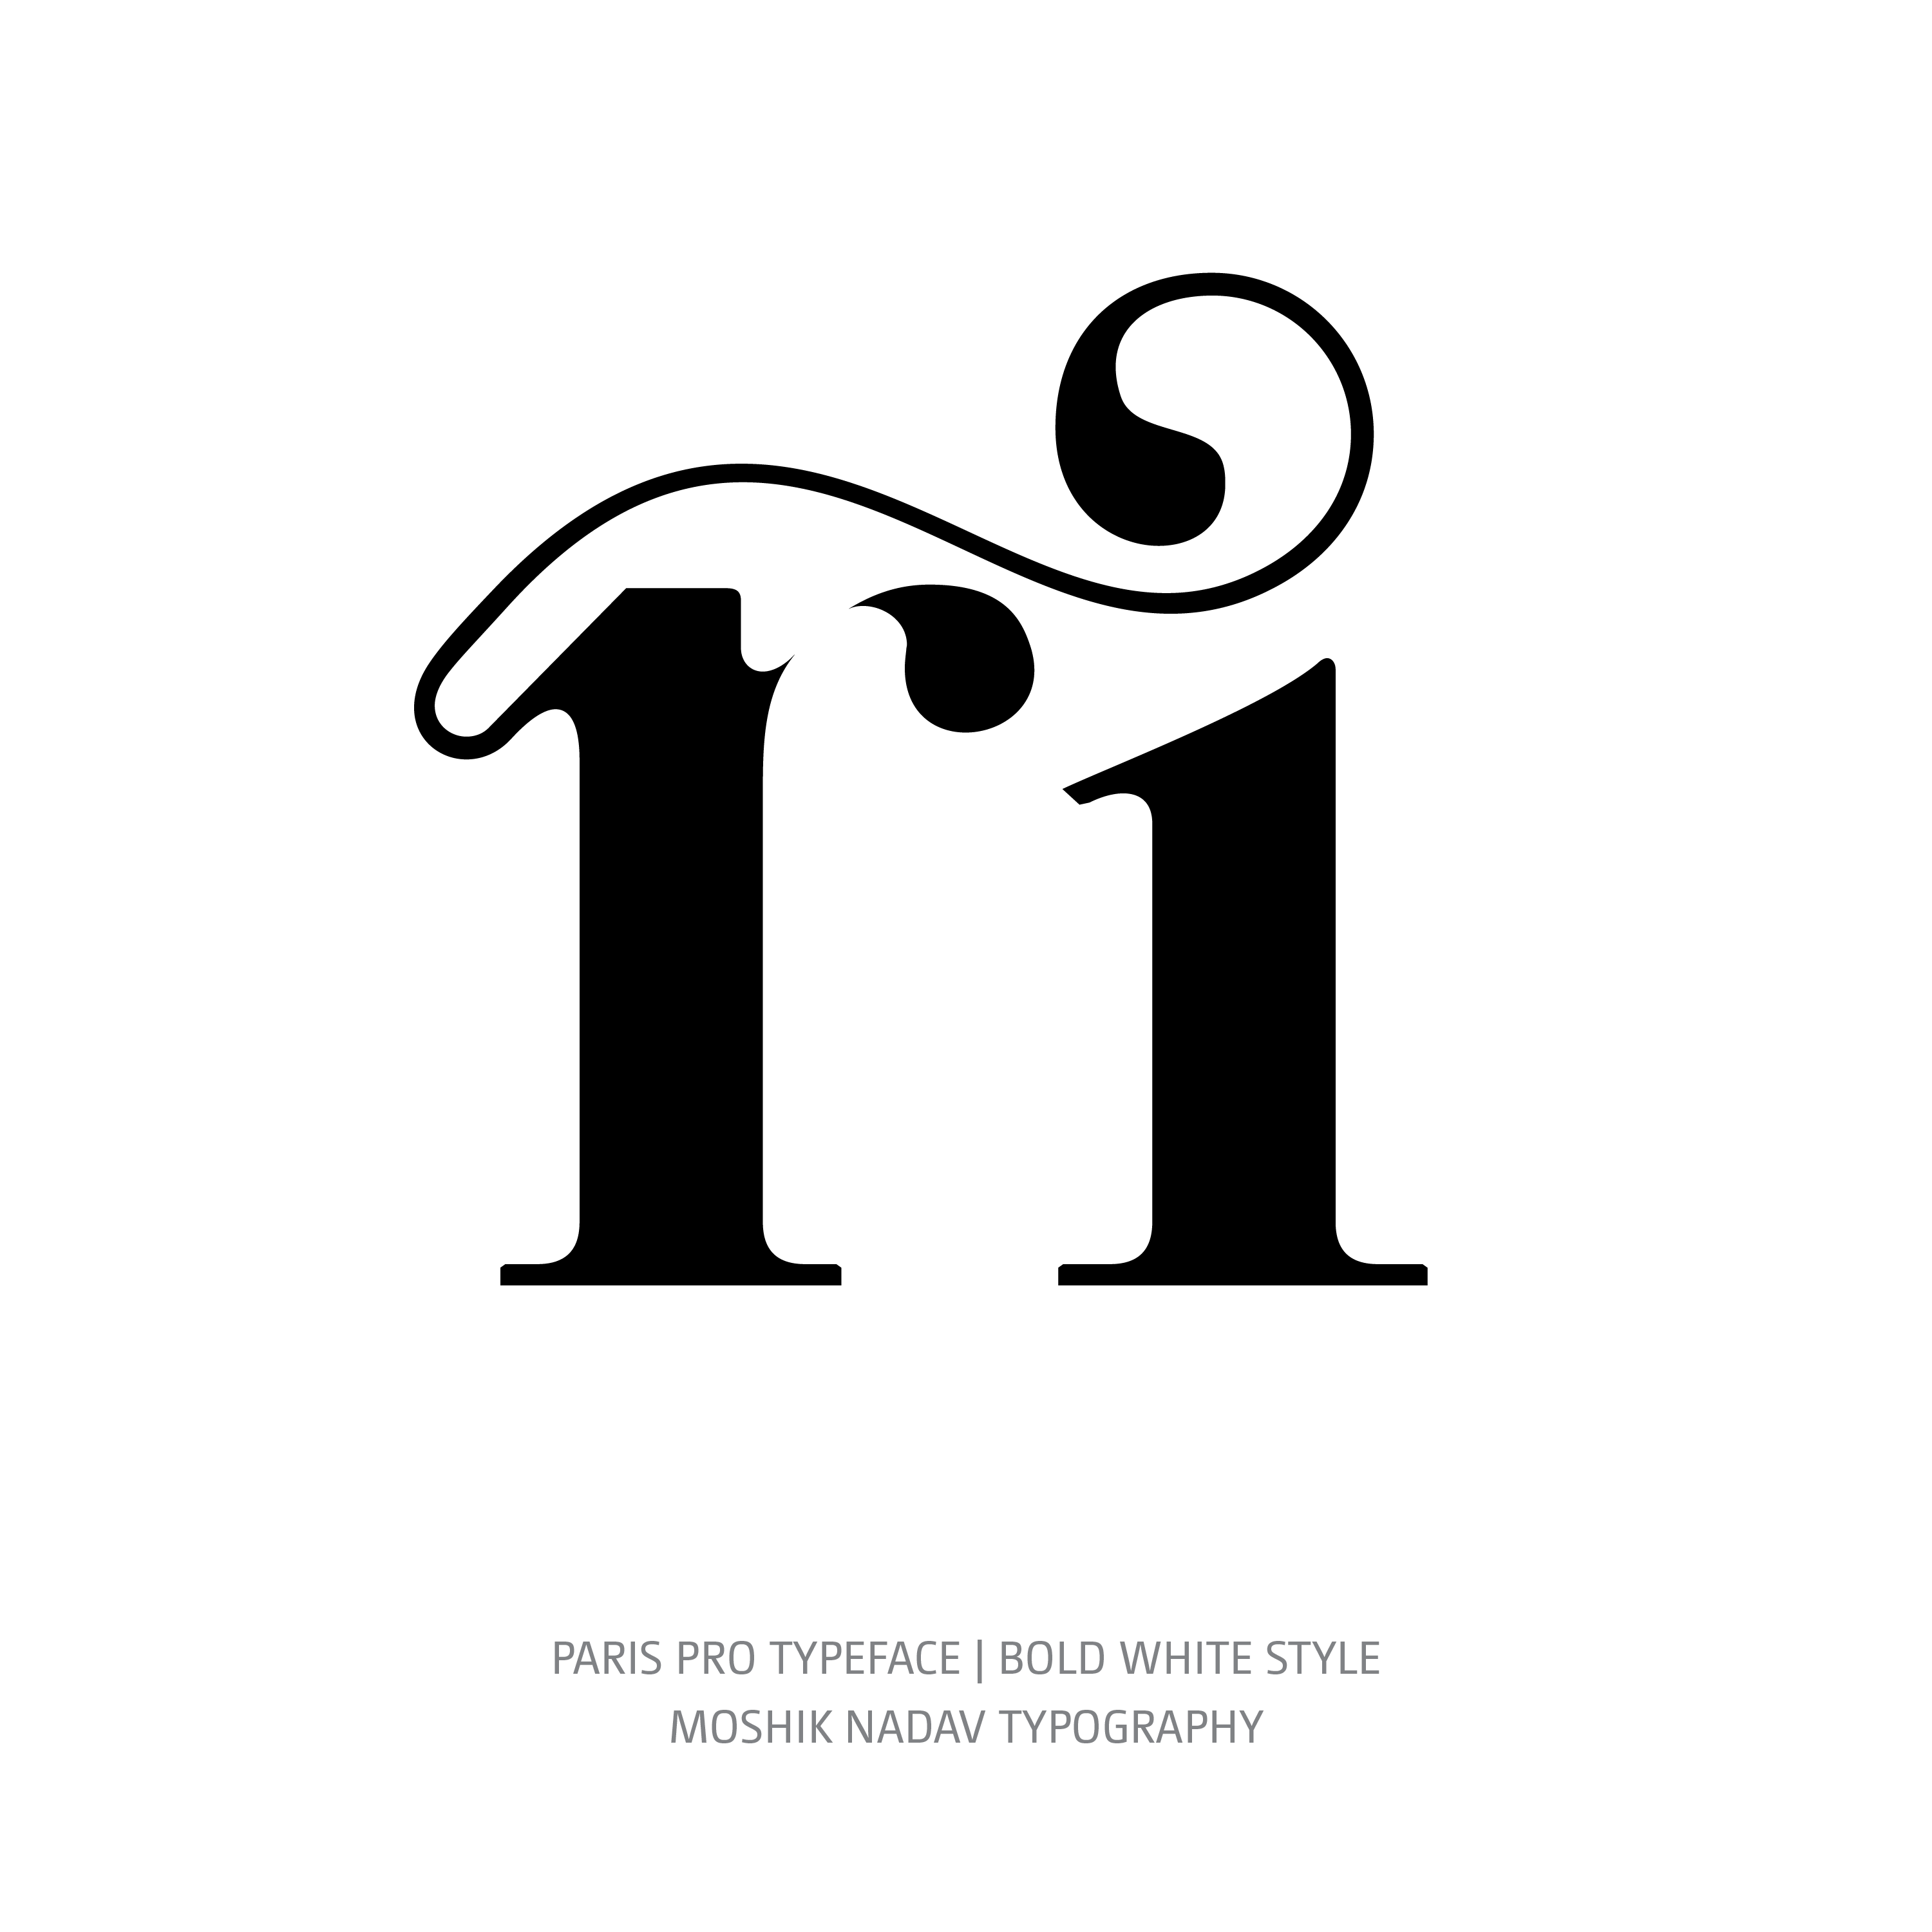 Paris Pro Typeface Bold White ri alternative ligature